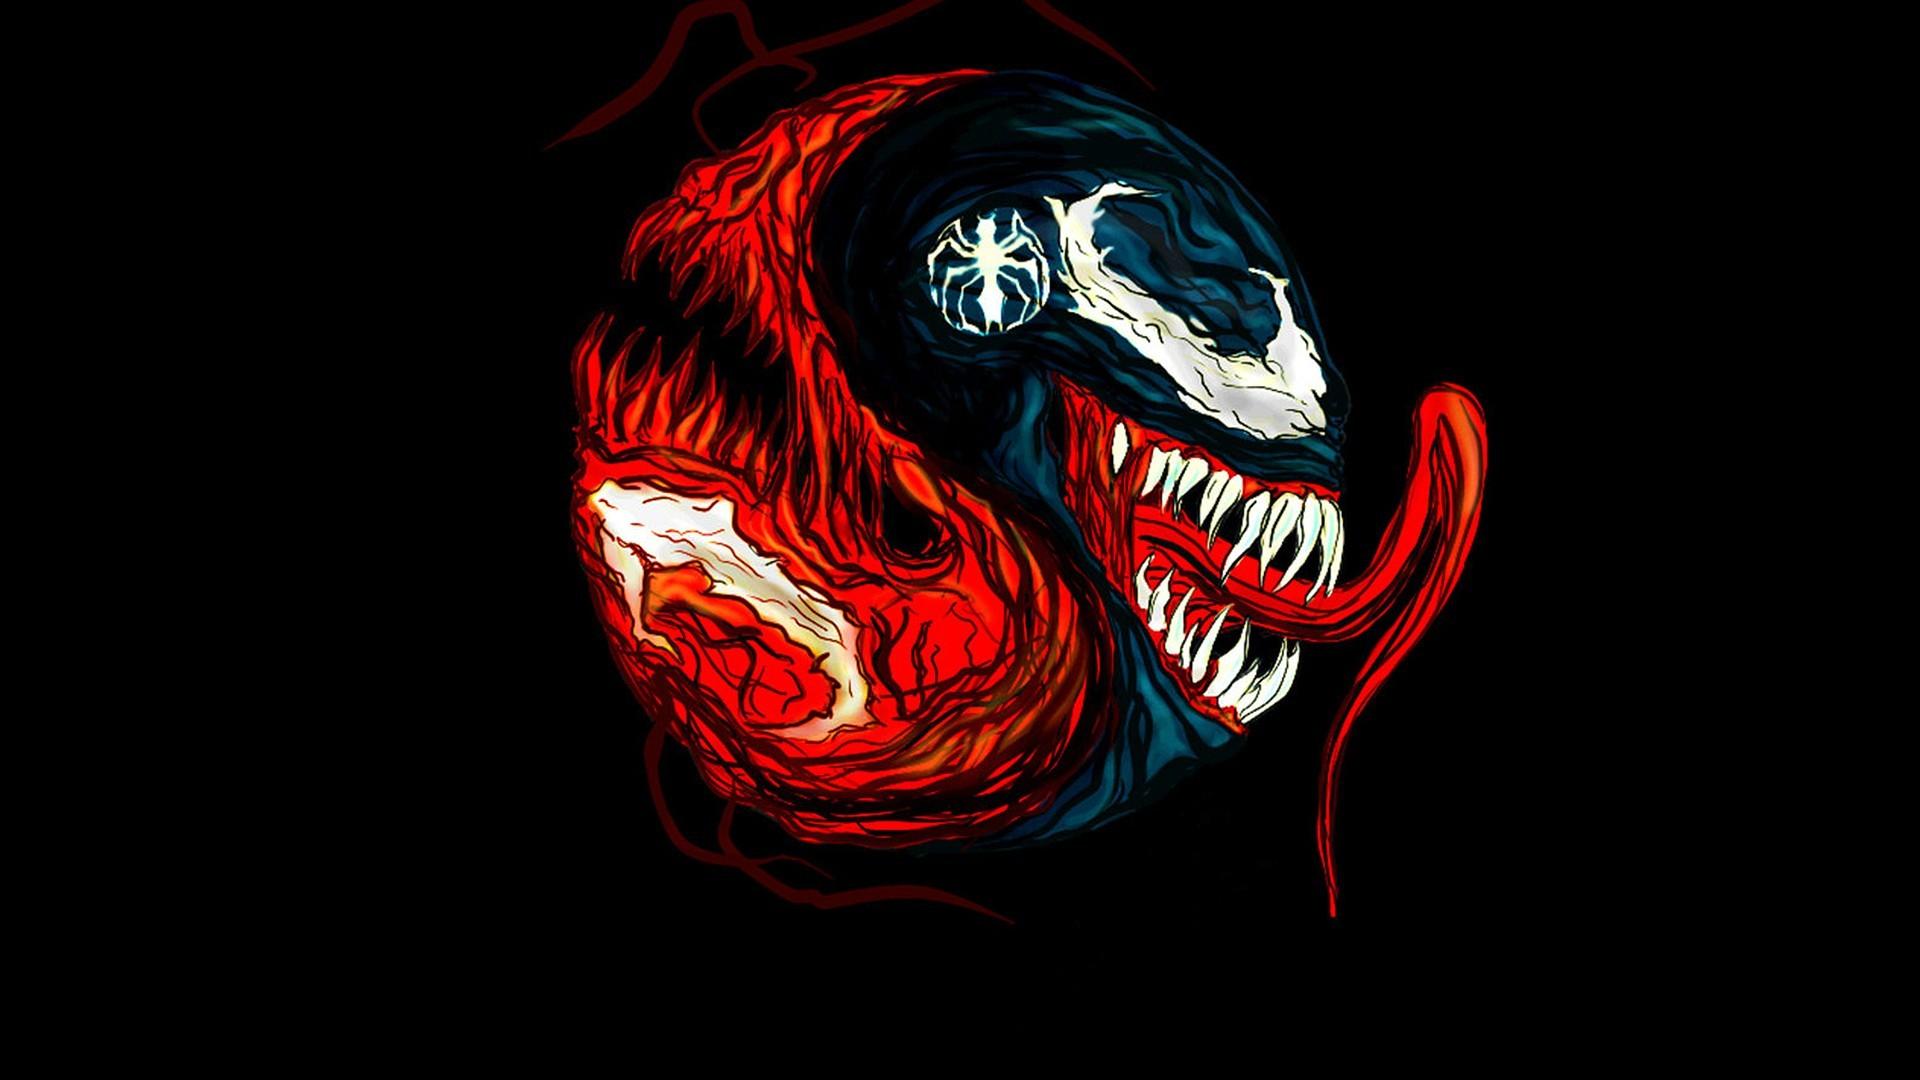 Carnage marvel comics venom black background fan art wallpaper 1920x1080